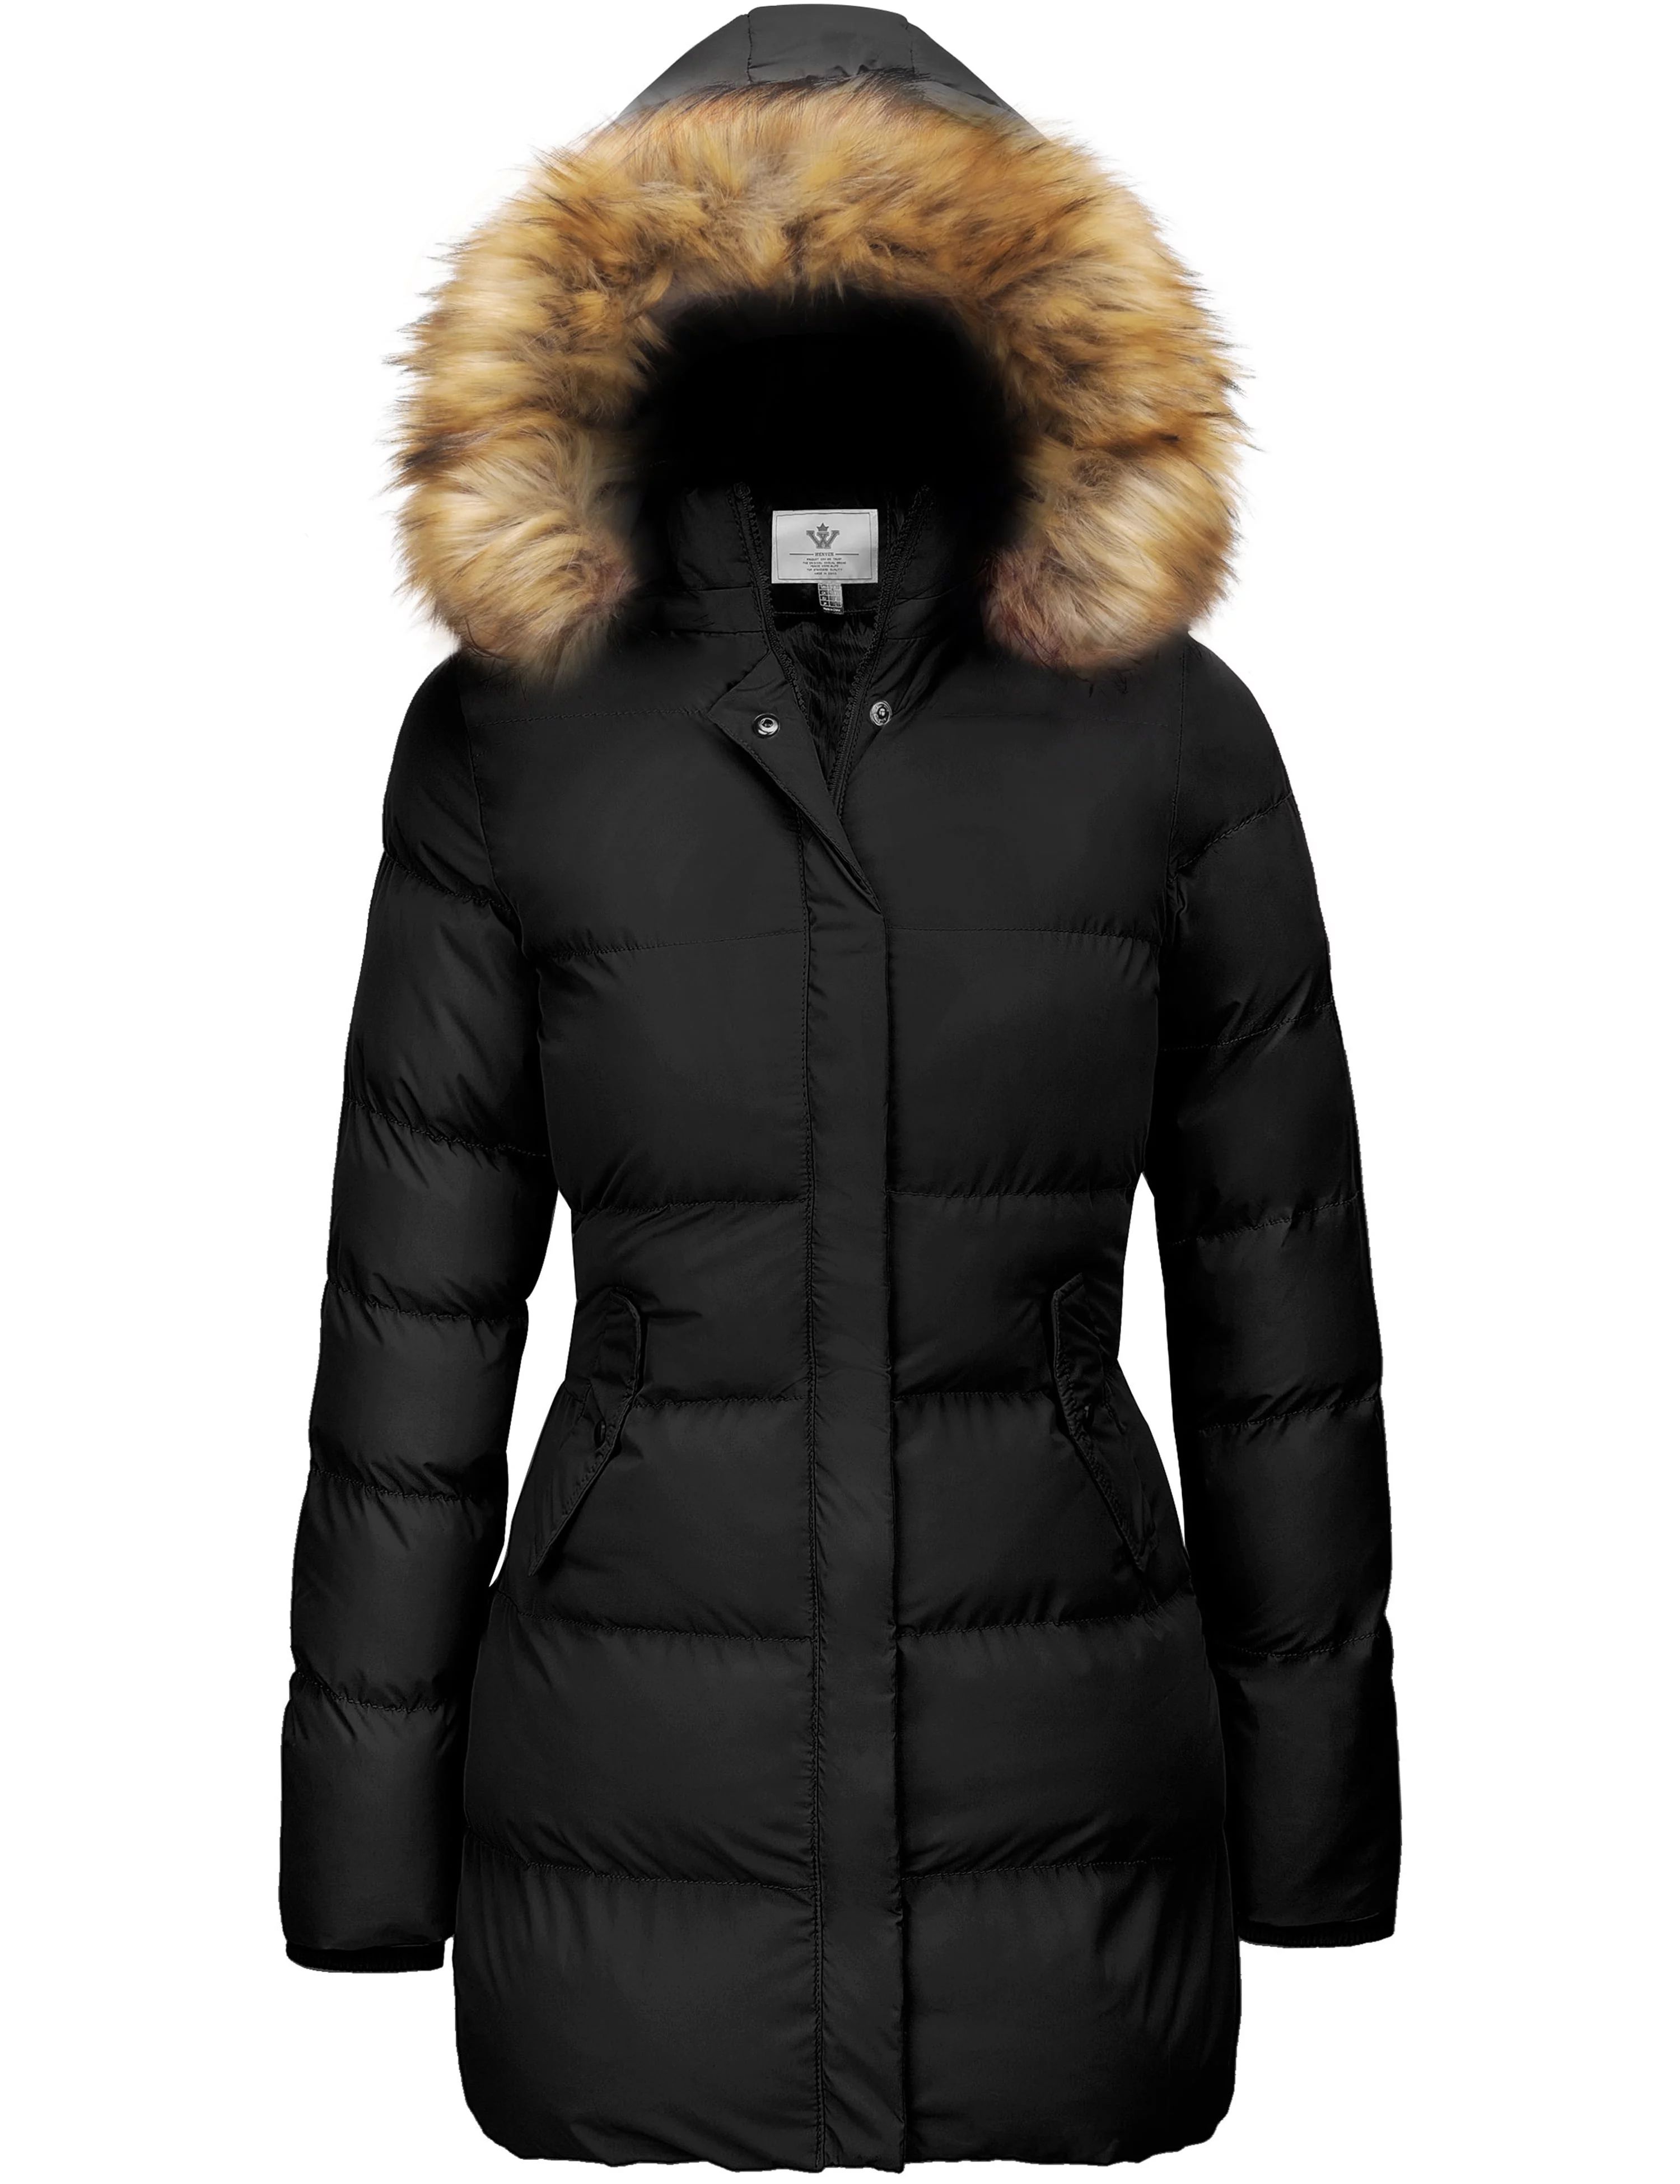 WenVen Women's Winter Coat Puffer Coat Warm Waterproof Jacket with Hood Black L | Walmart (US)